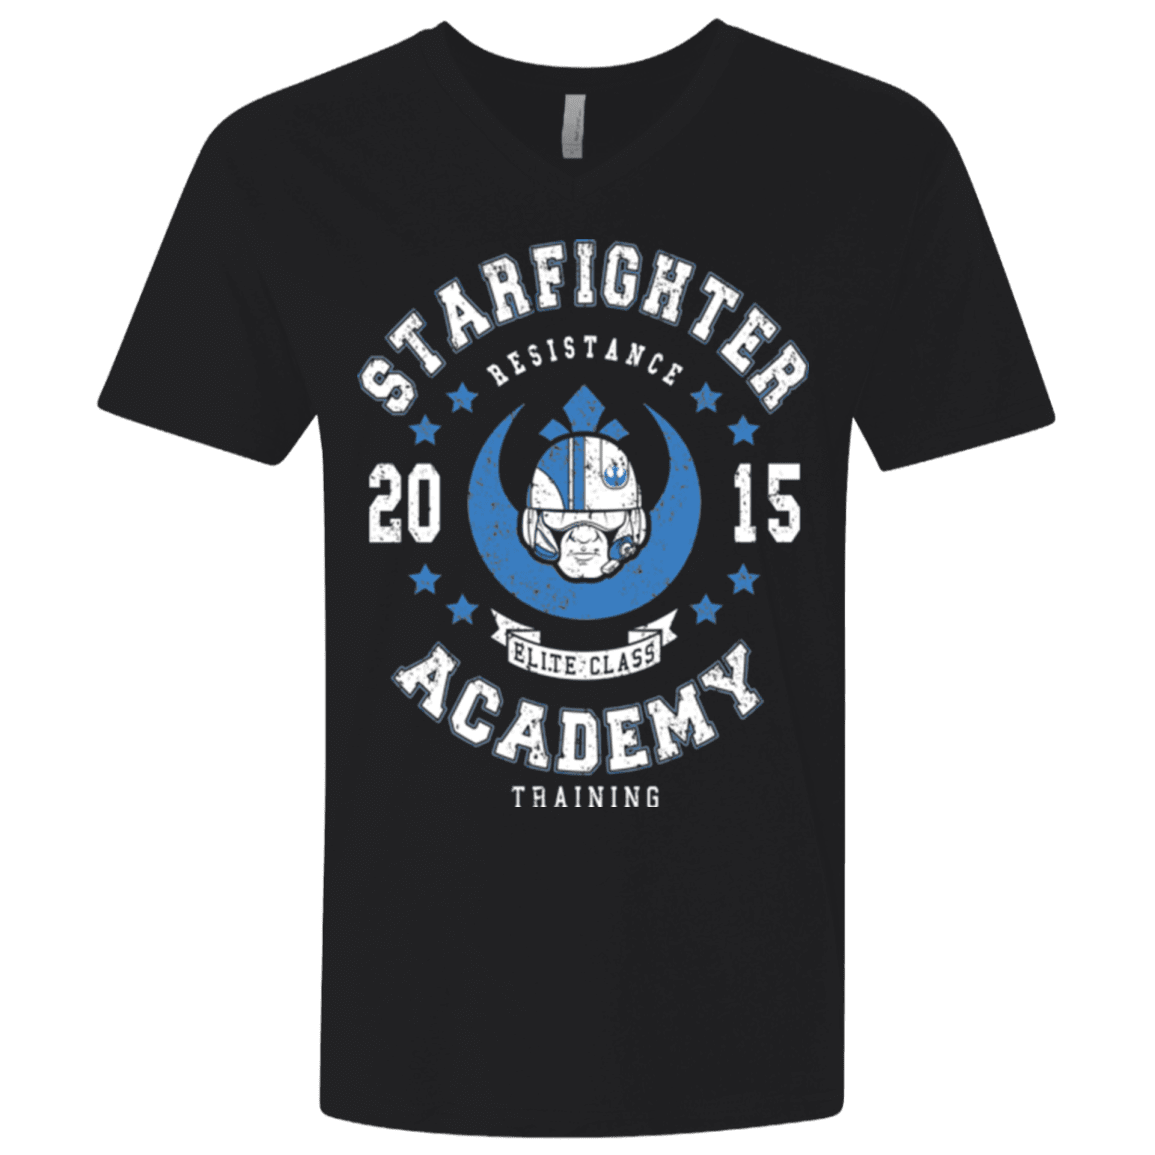 T-Shirts Black / X-Small Starfighter Academy 15 Men's Premium V-Neck